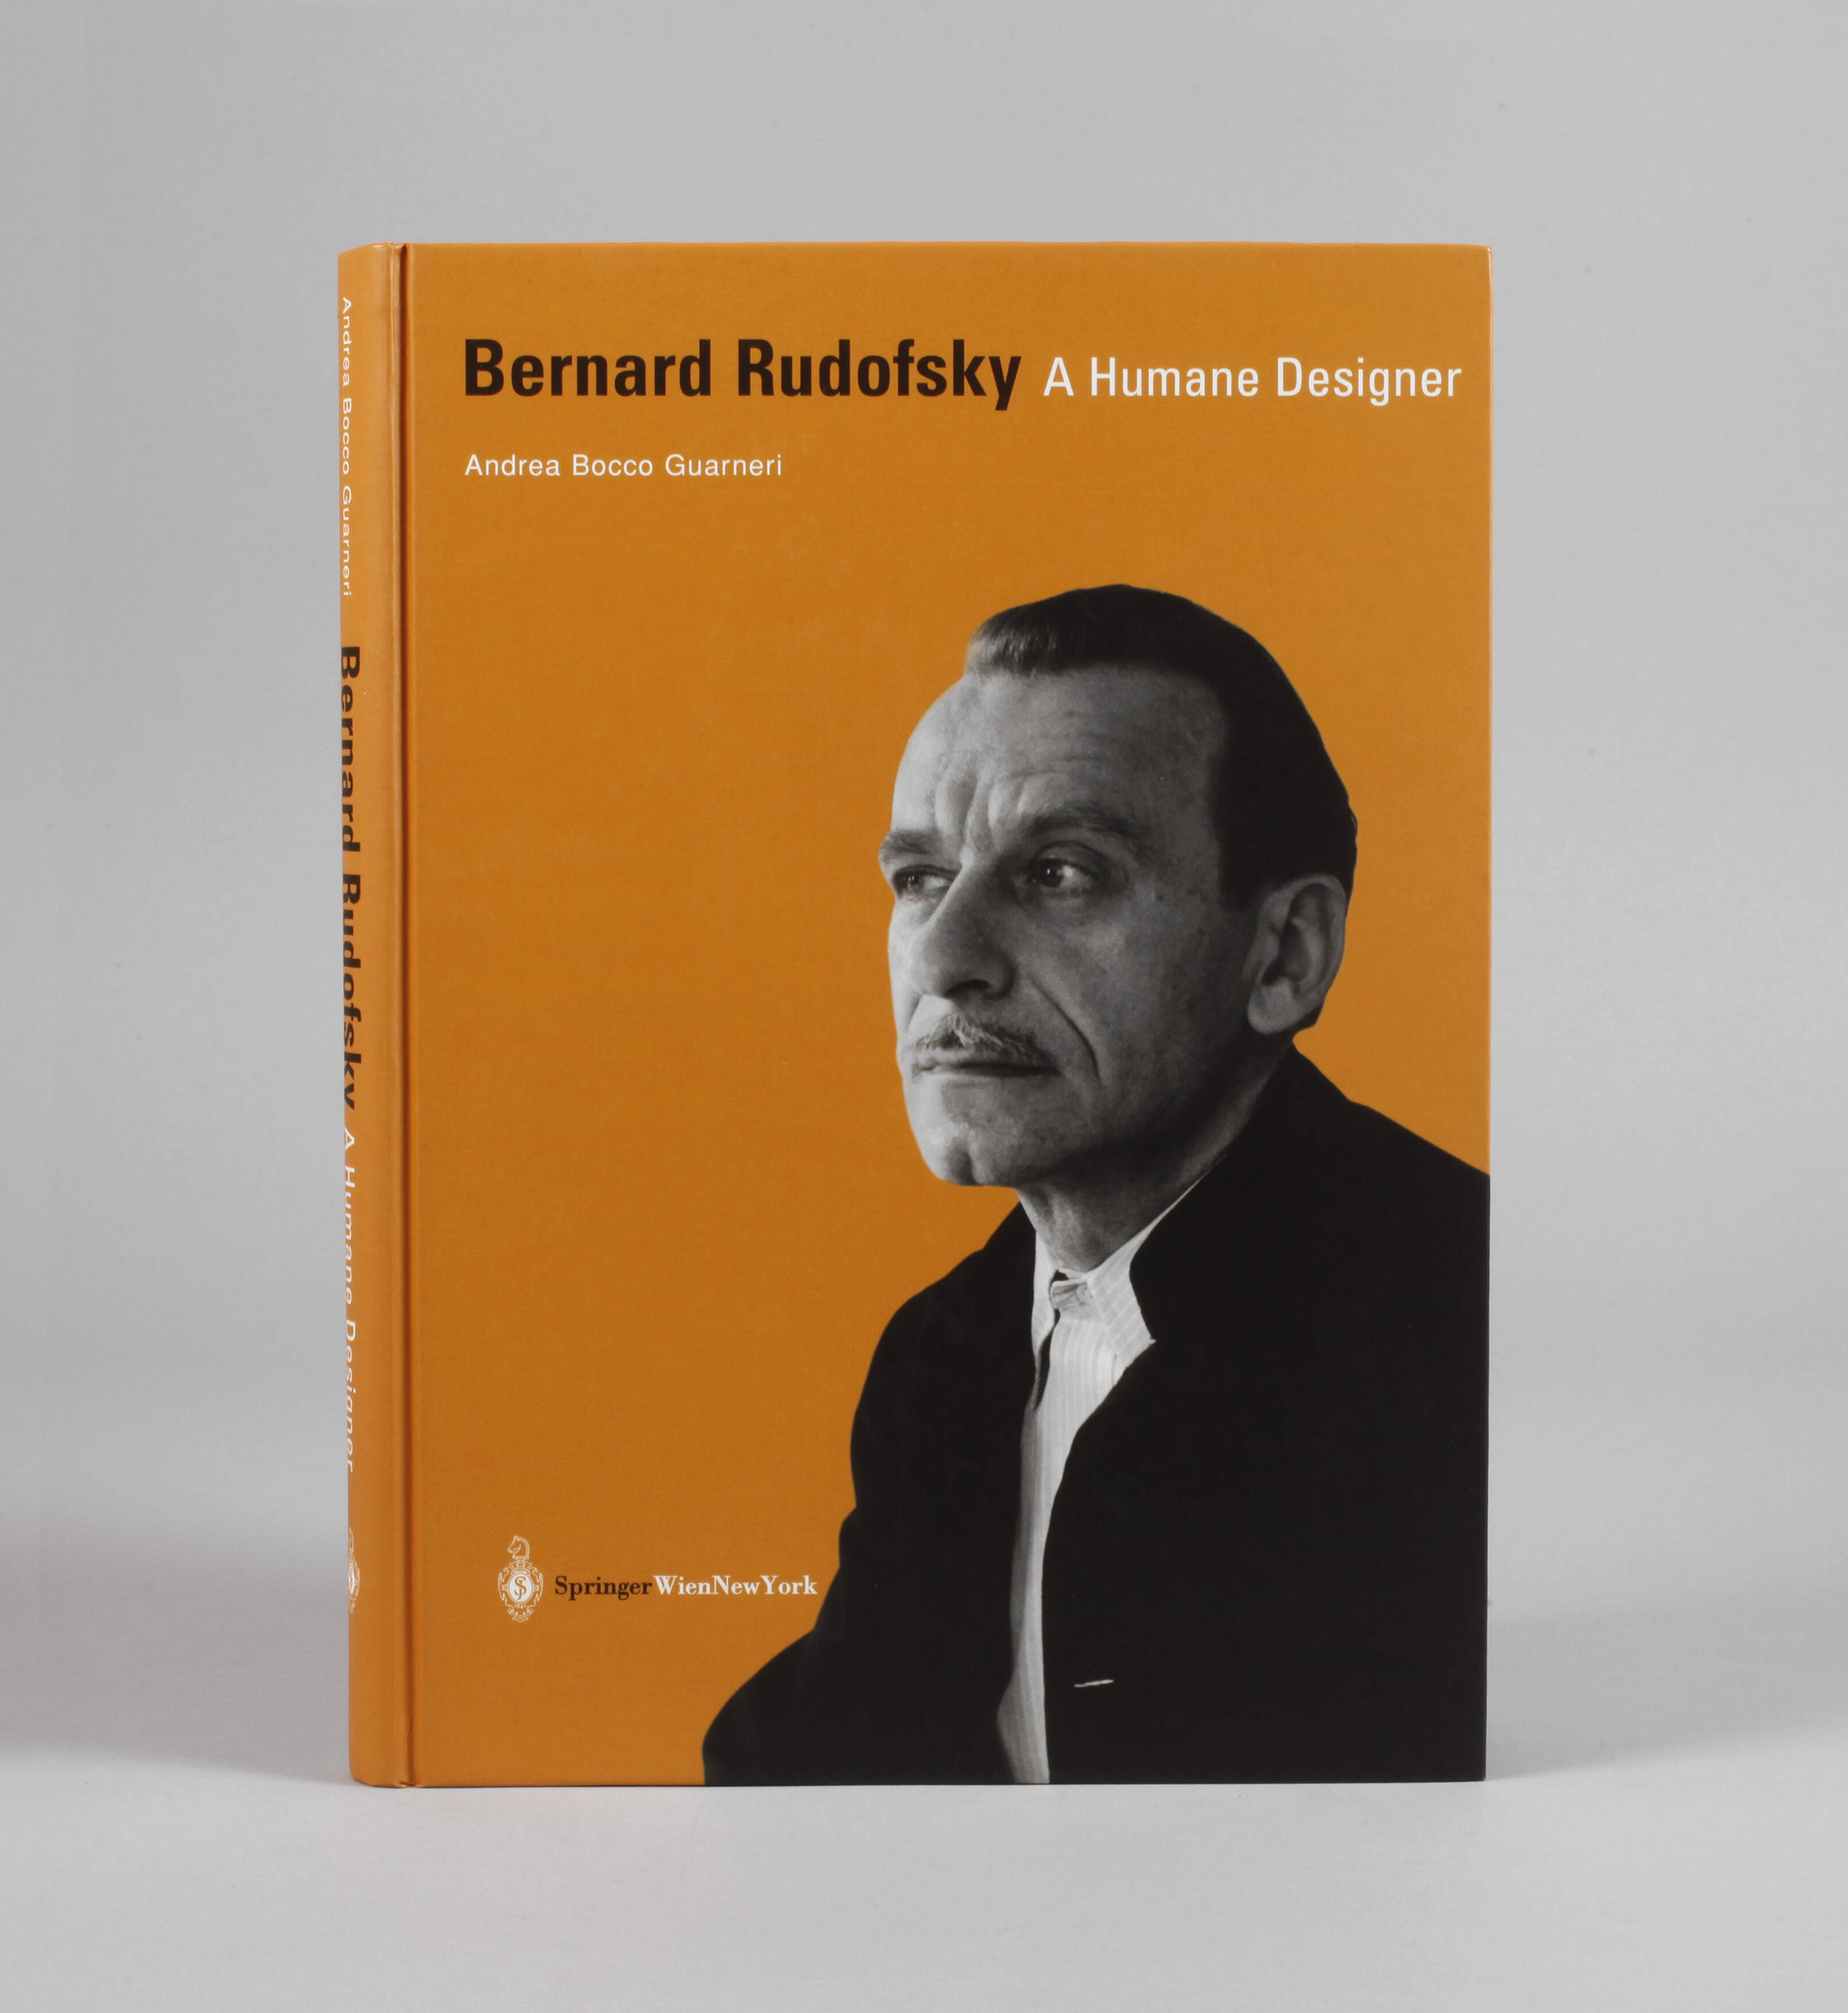 Bernard Rudofsky, A Humane Designer